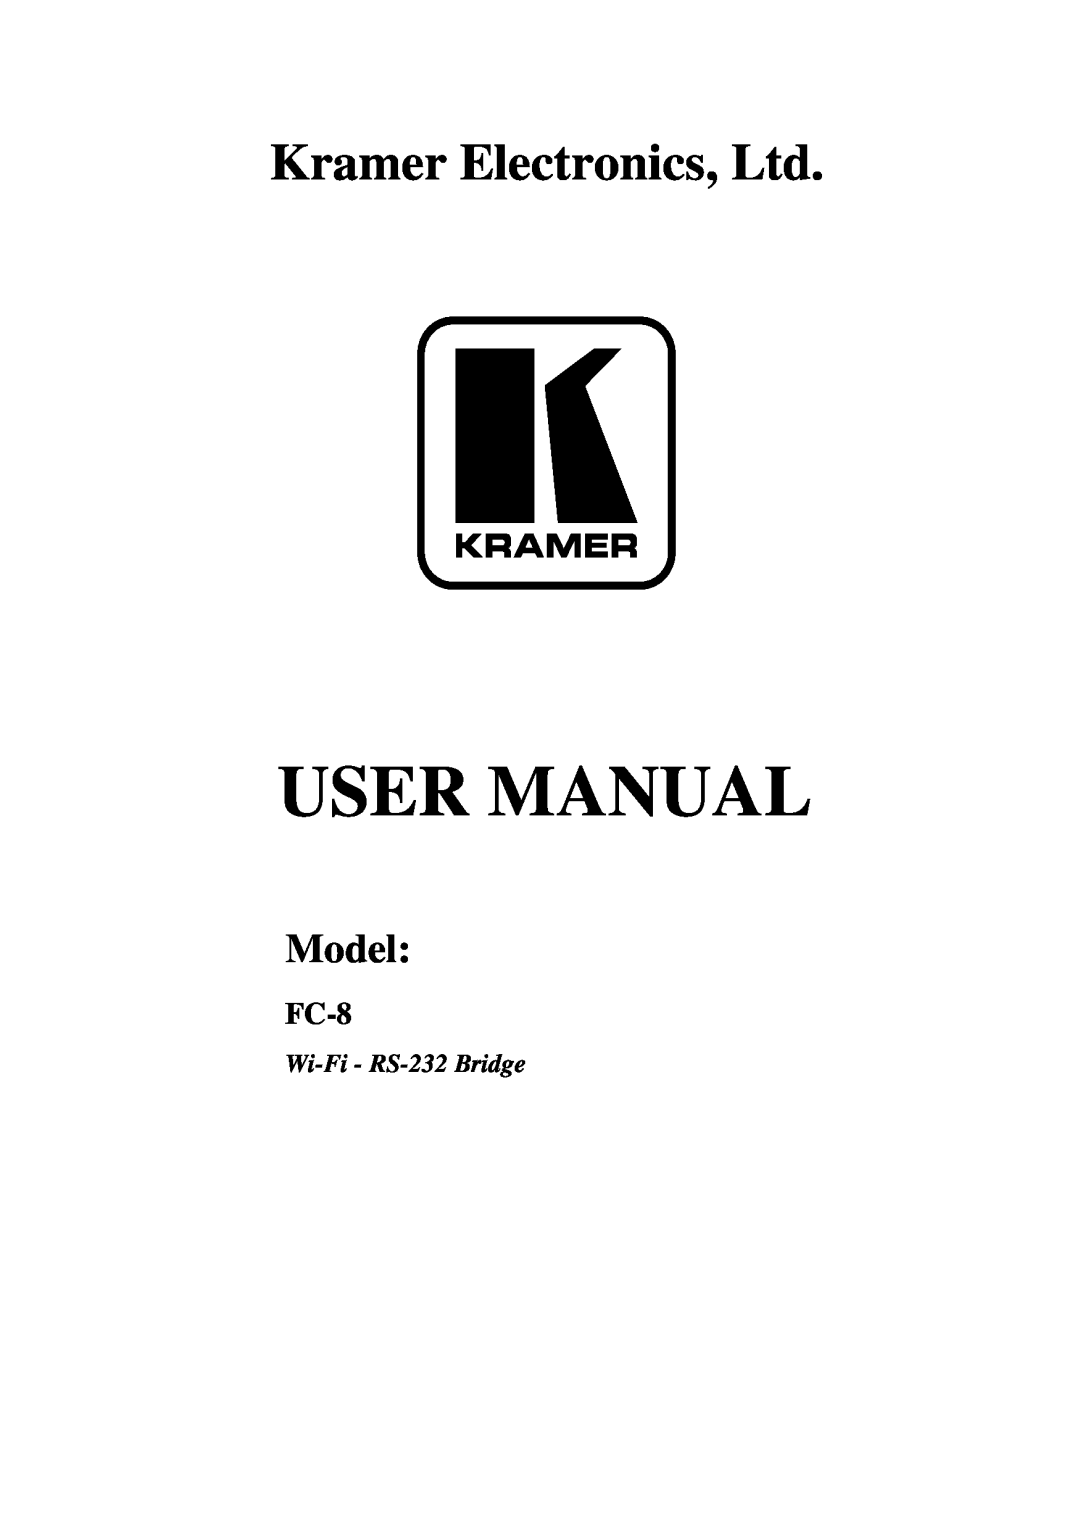 Kramer Electronics FC-8 user manual User Manual, Model, Wi-Fi - RS-232 Bridge 